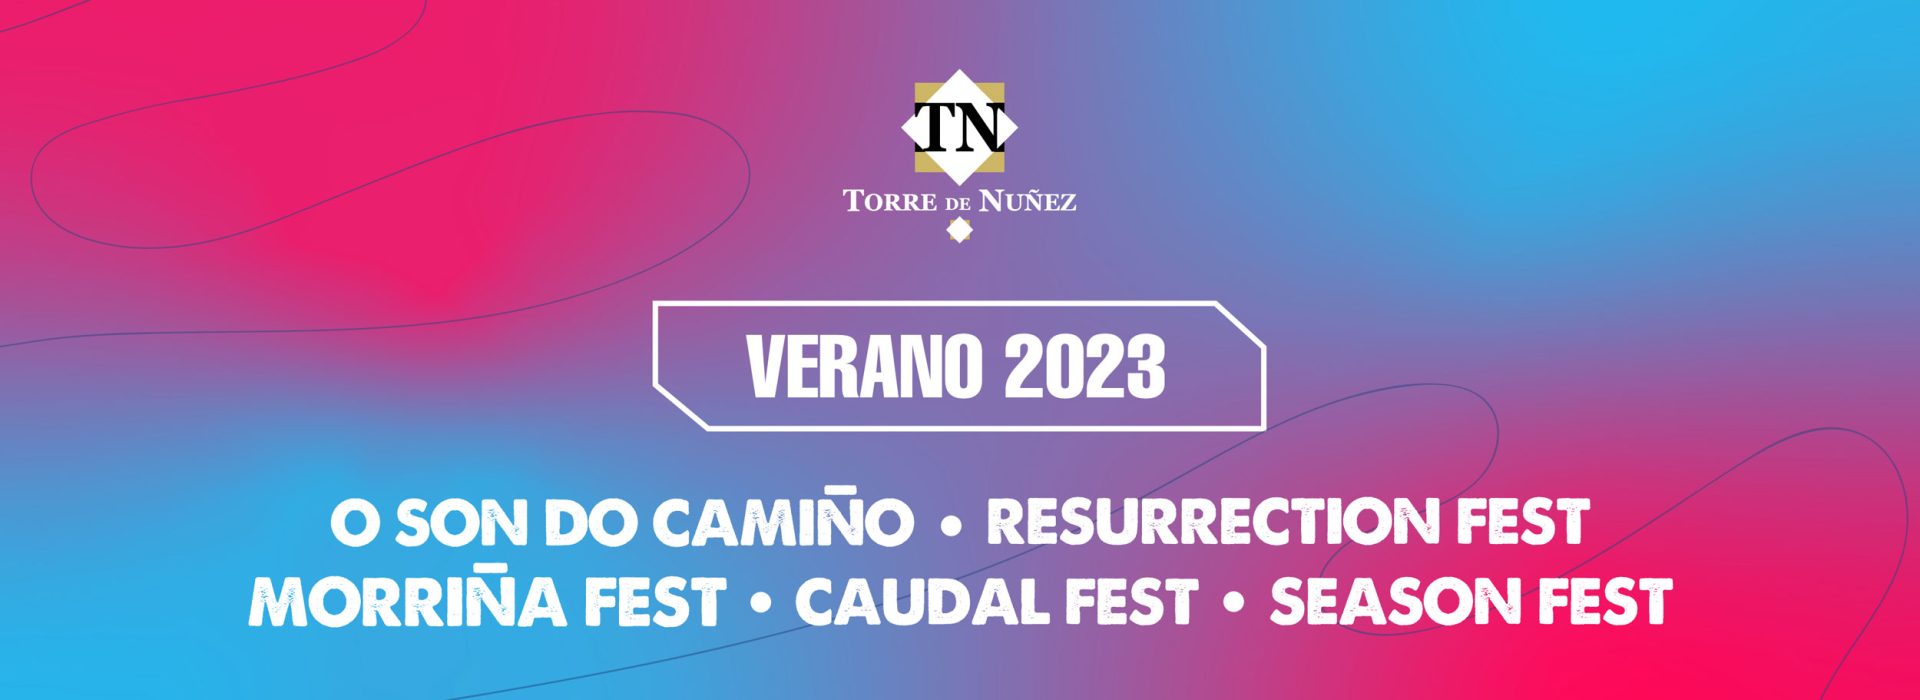 TORRE-DE-NUÑEZ_BANNER-FESTIVALES_V1